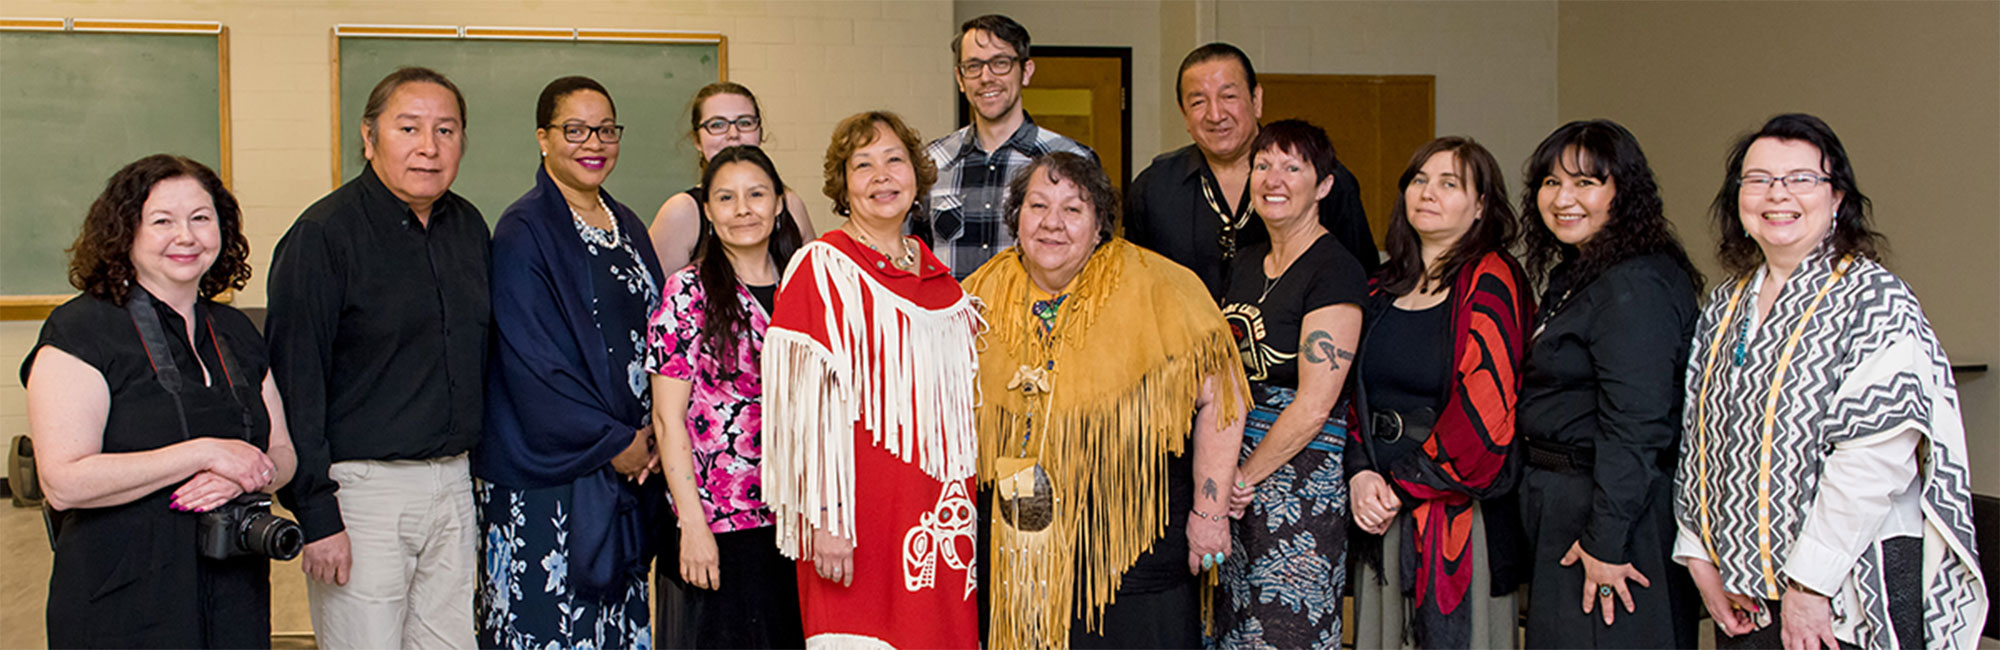 Aboriginal Education Council and York University representatives